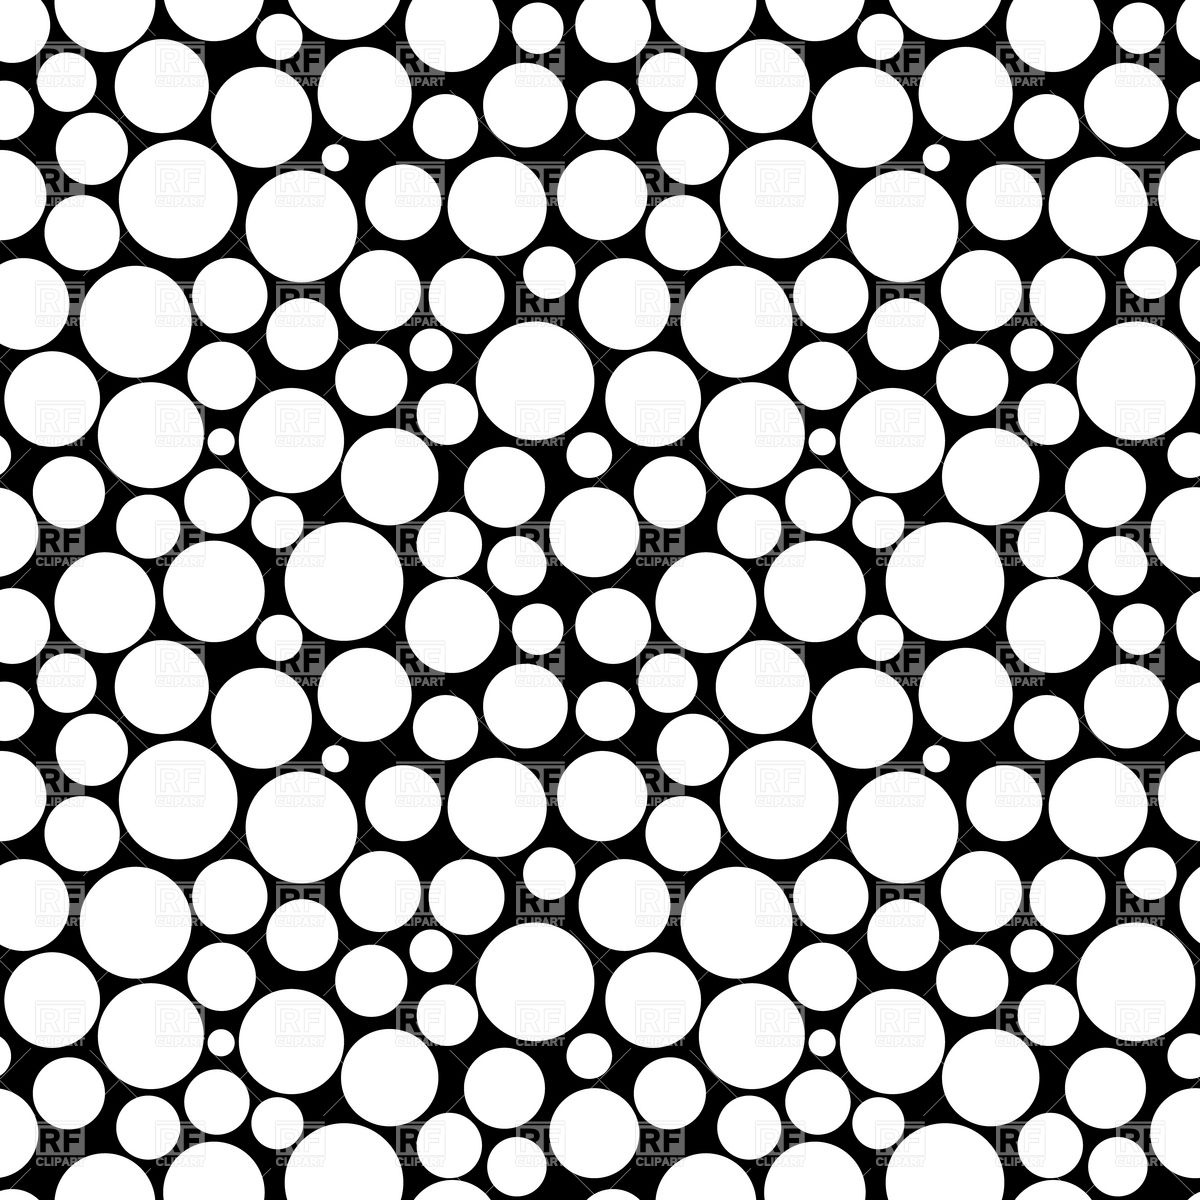 Black and White Bubble Polka Dot Seamless